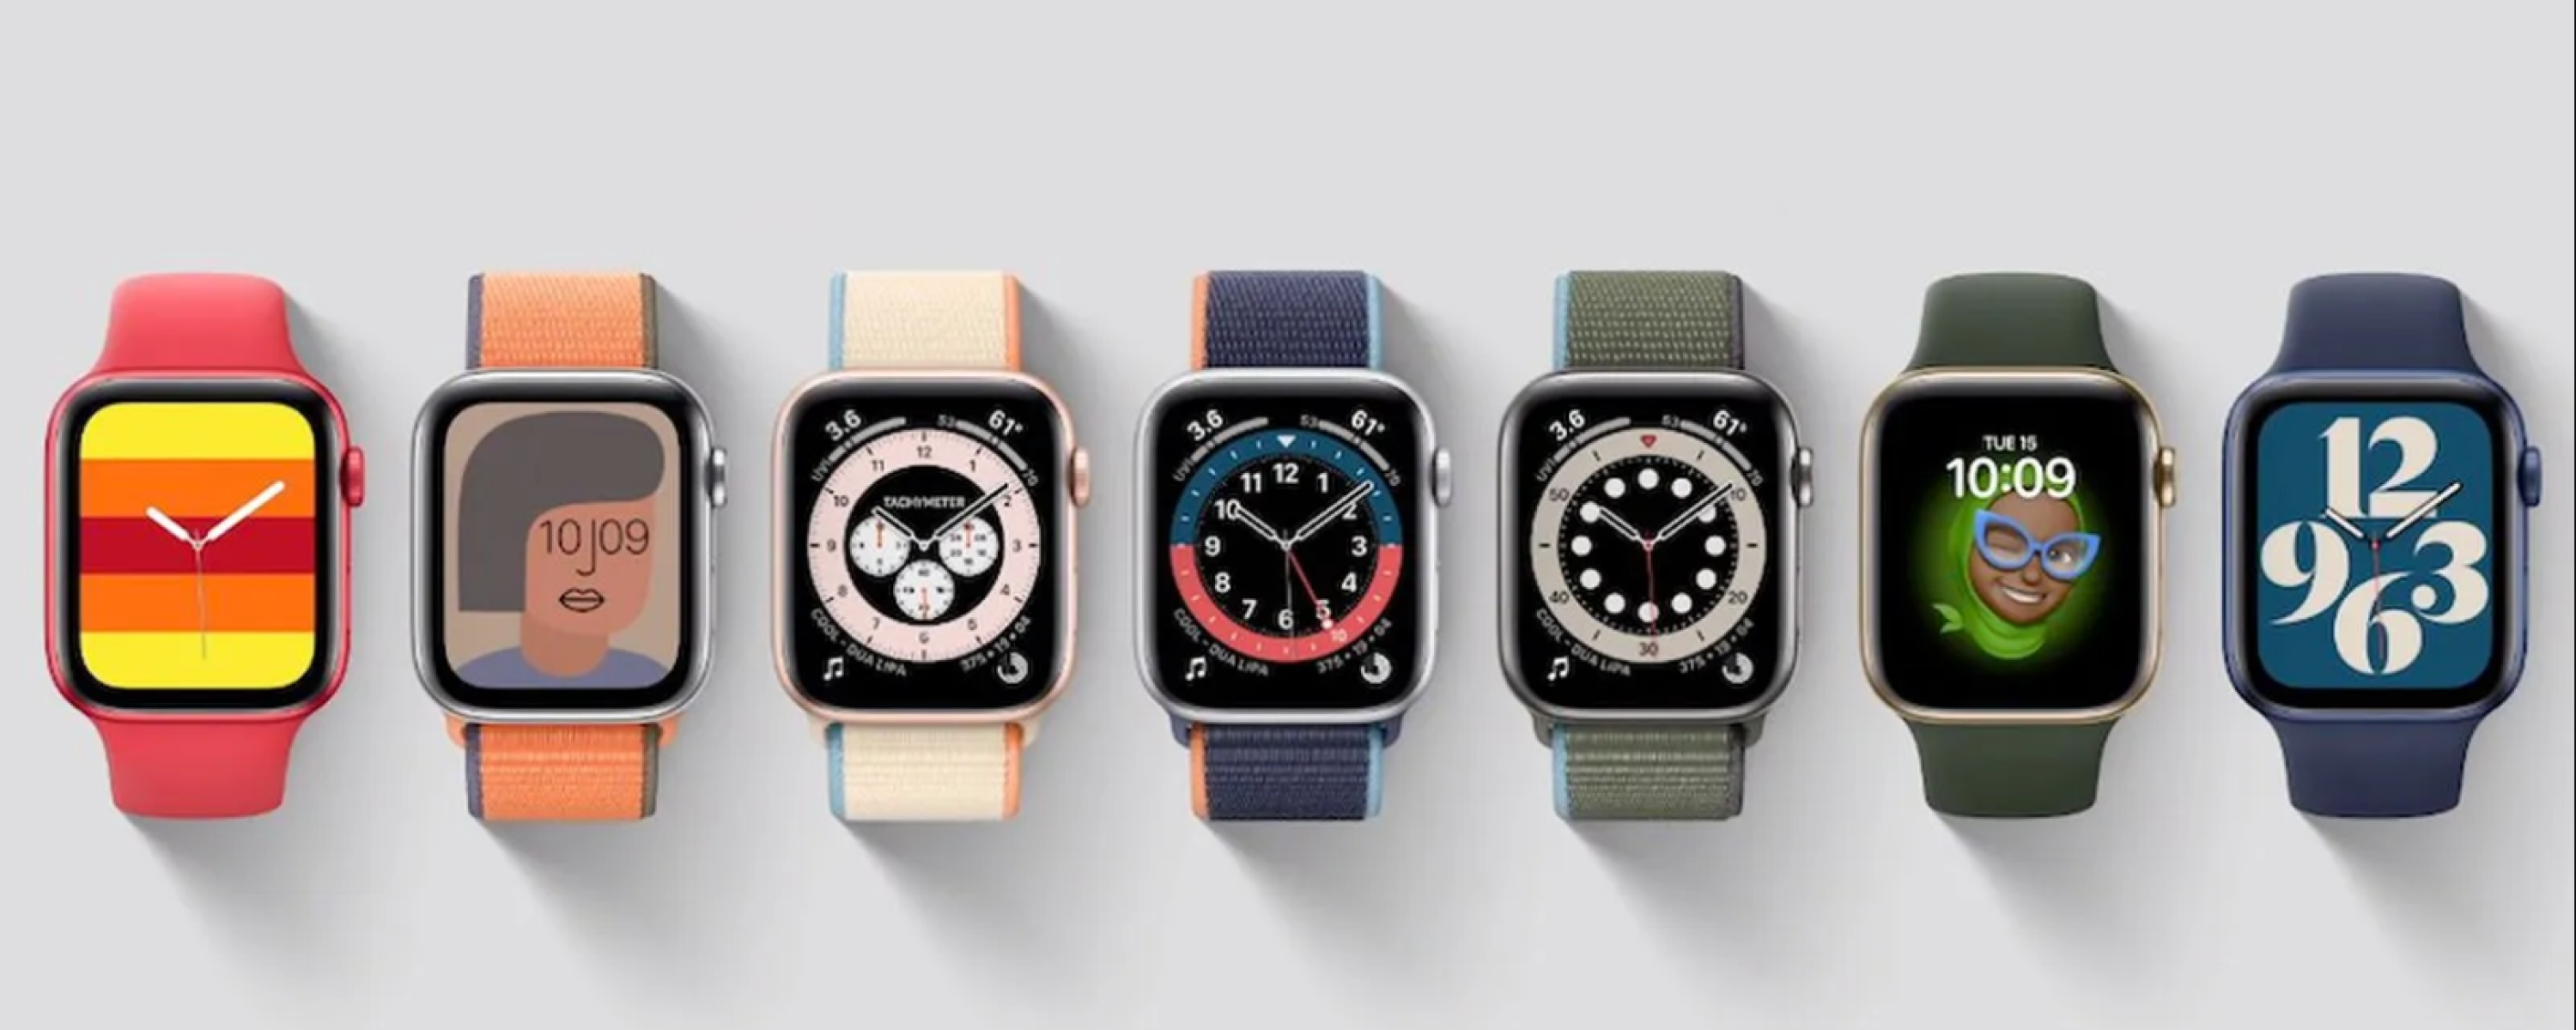 15 Best Apple Watch Faces in 2022